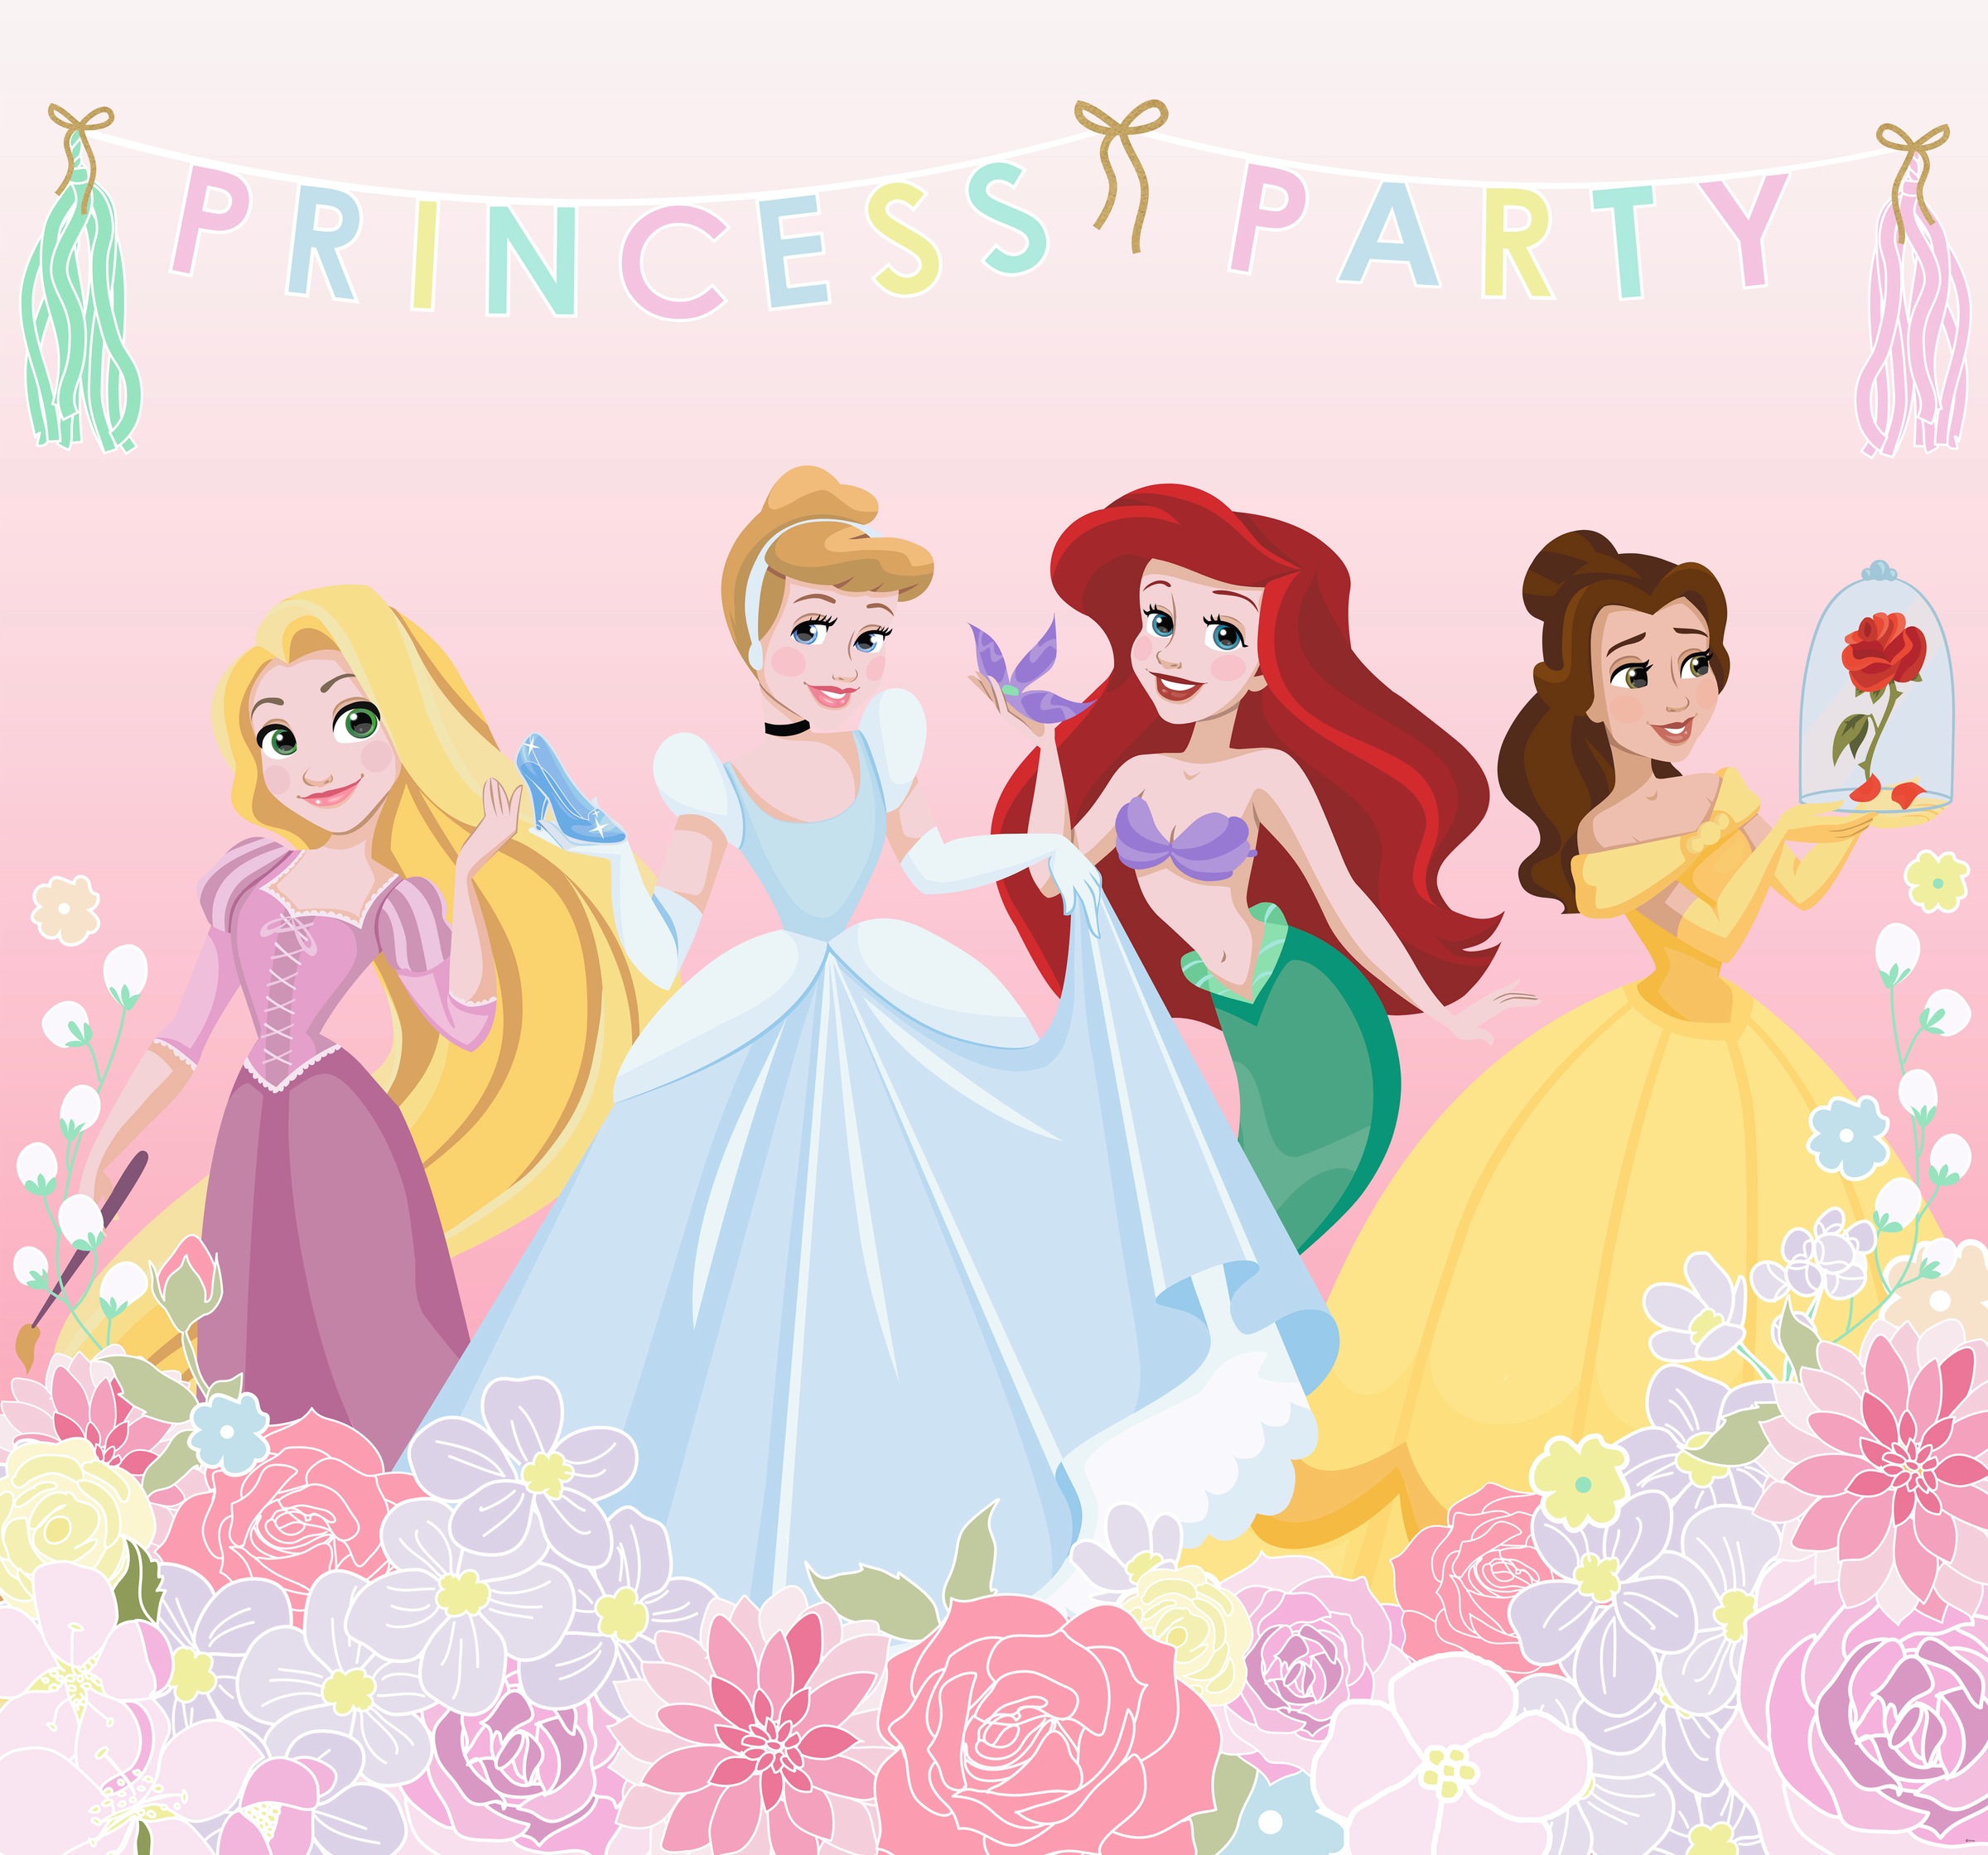 Fototapete »Prinzessinnen Party«, Mehrfarbig - 300x280cm